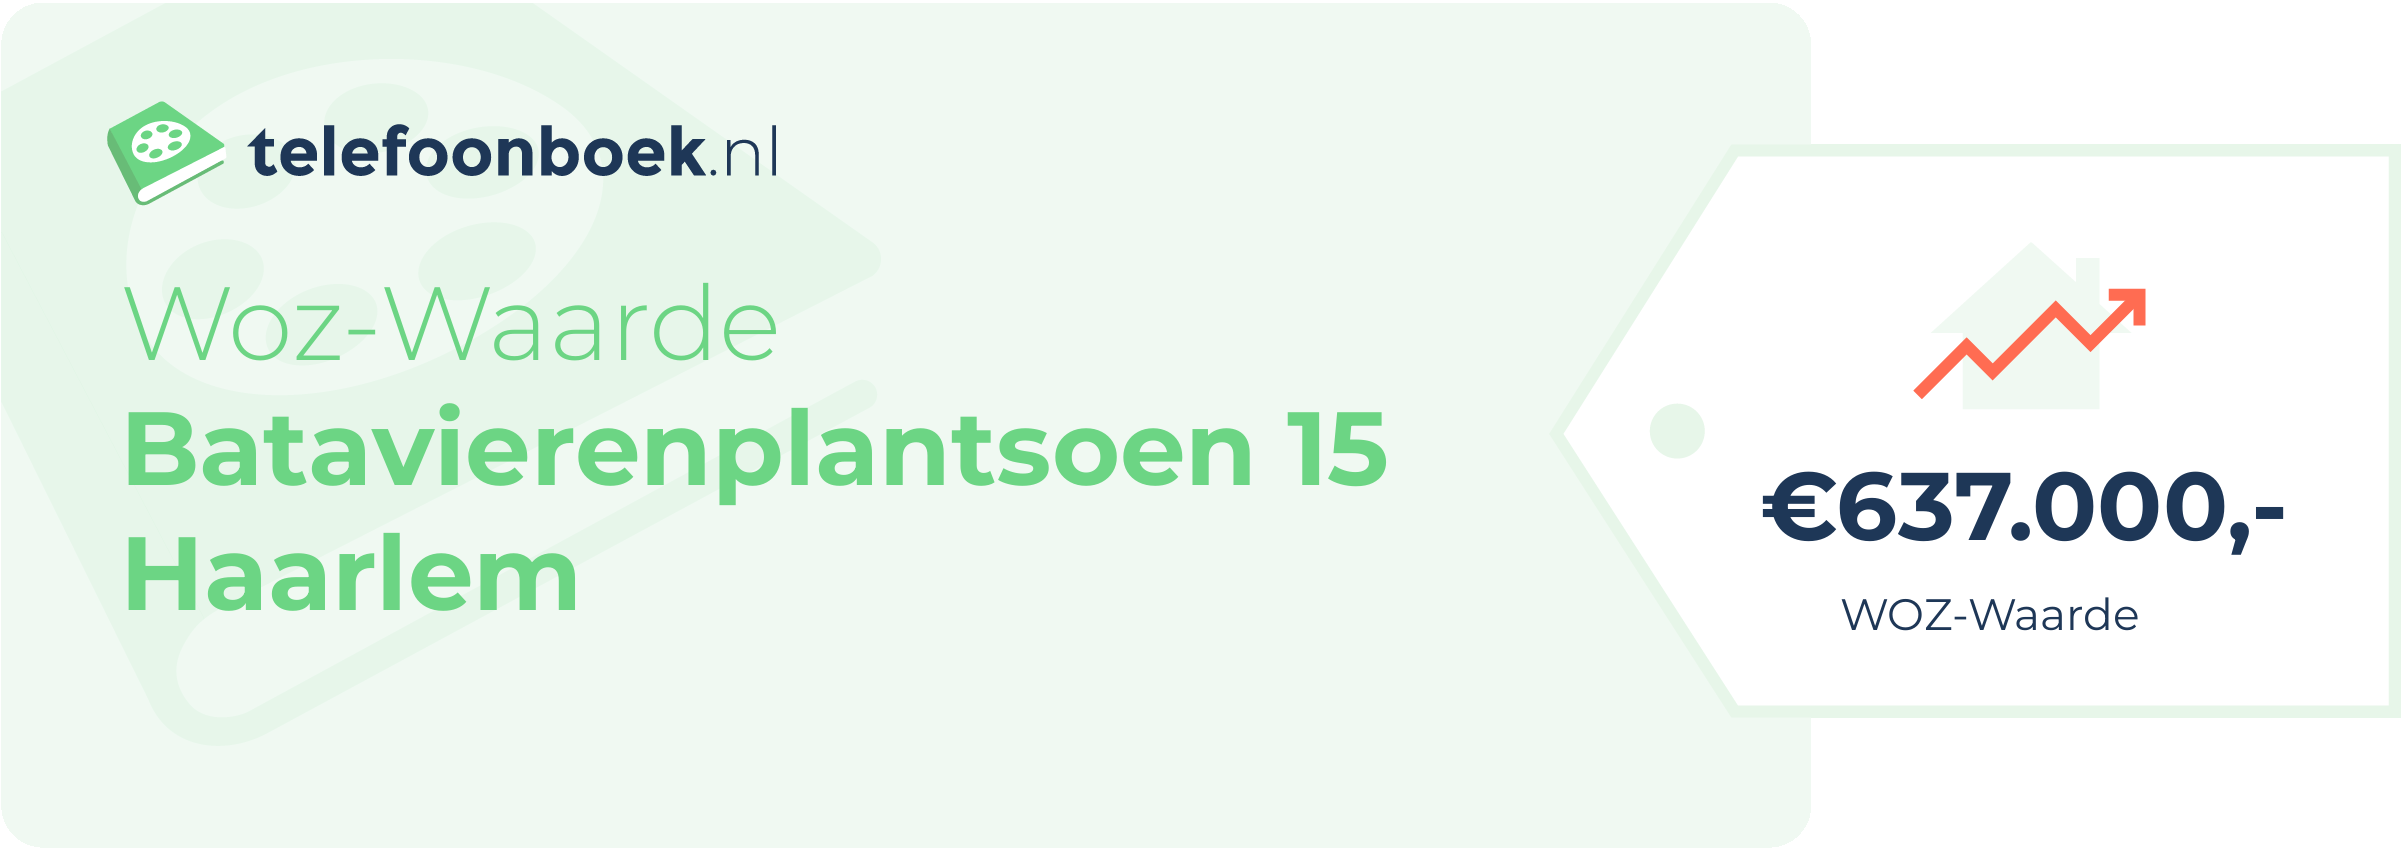 WOZ-waarde Batavierenplantsoen 15 Haarlem